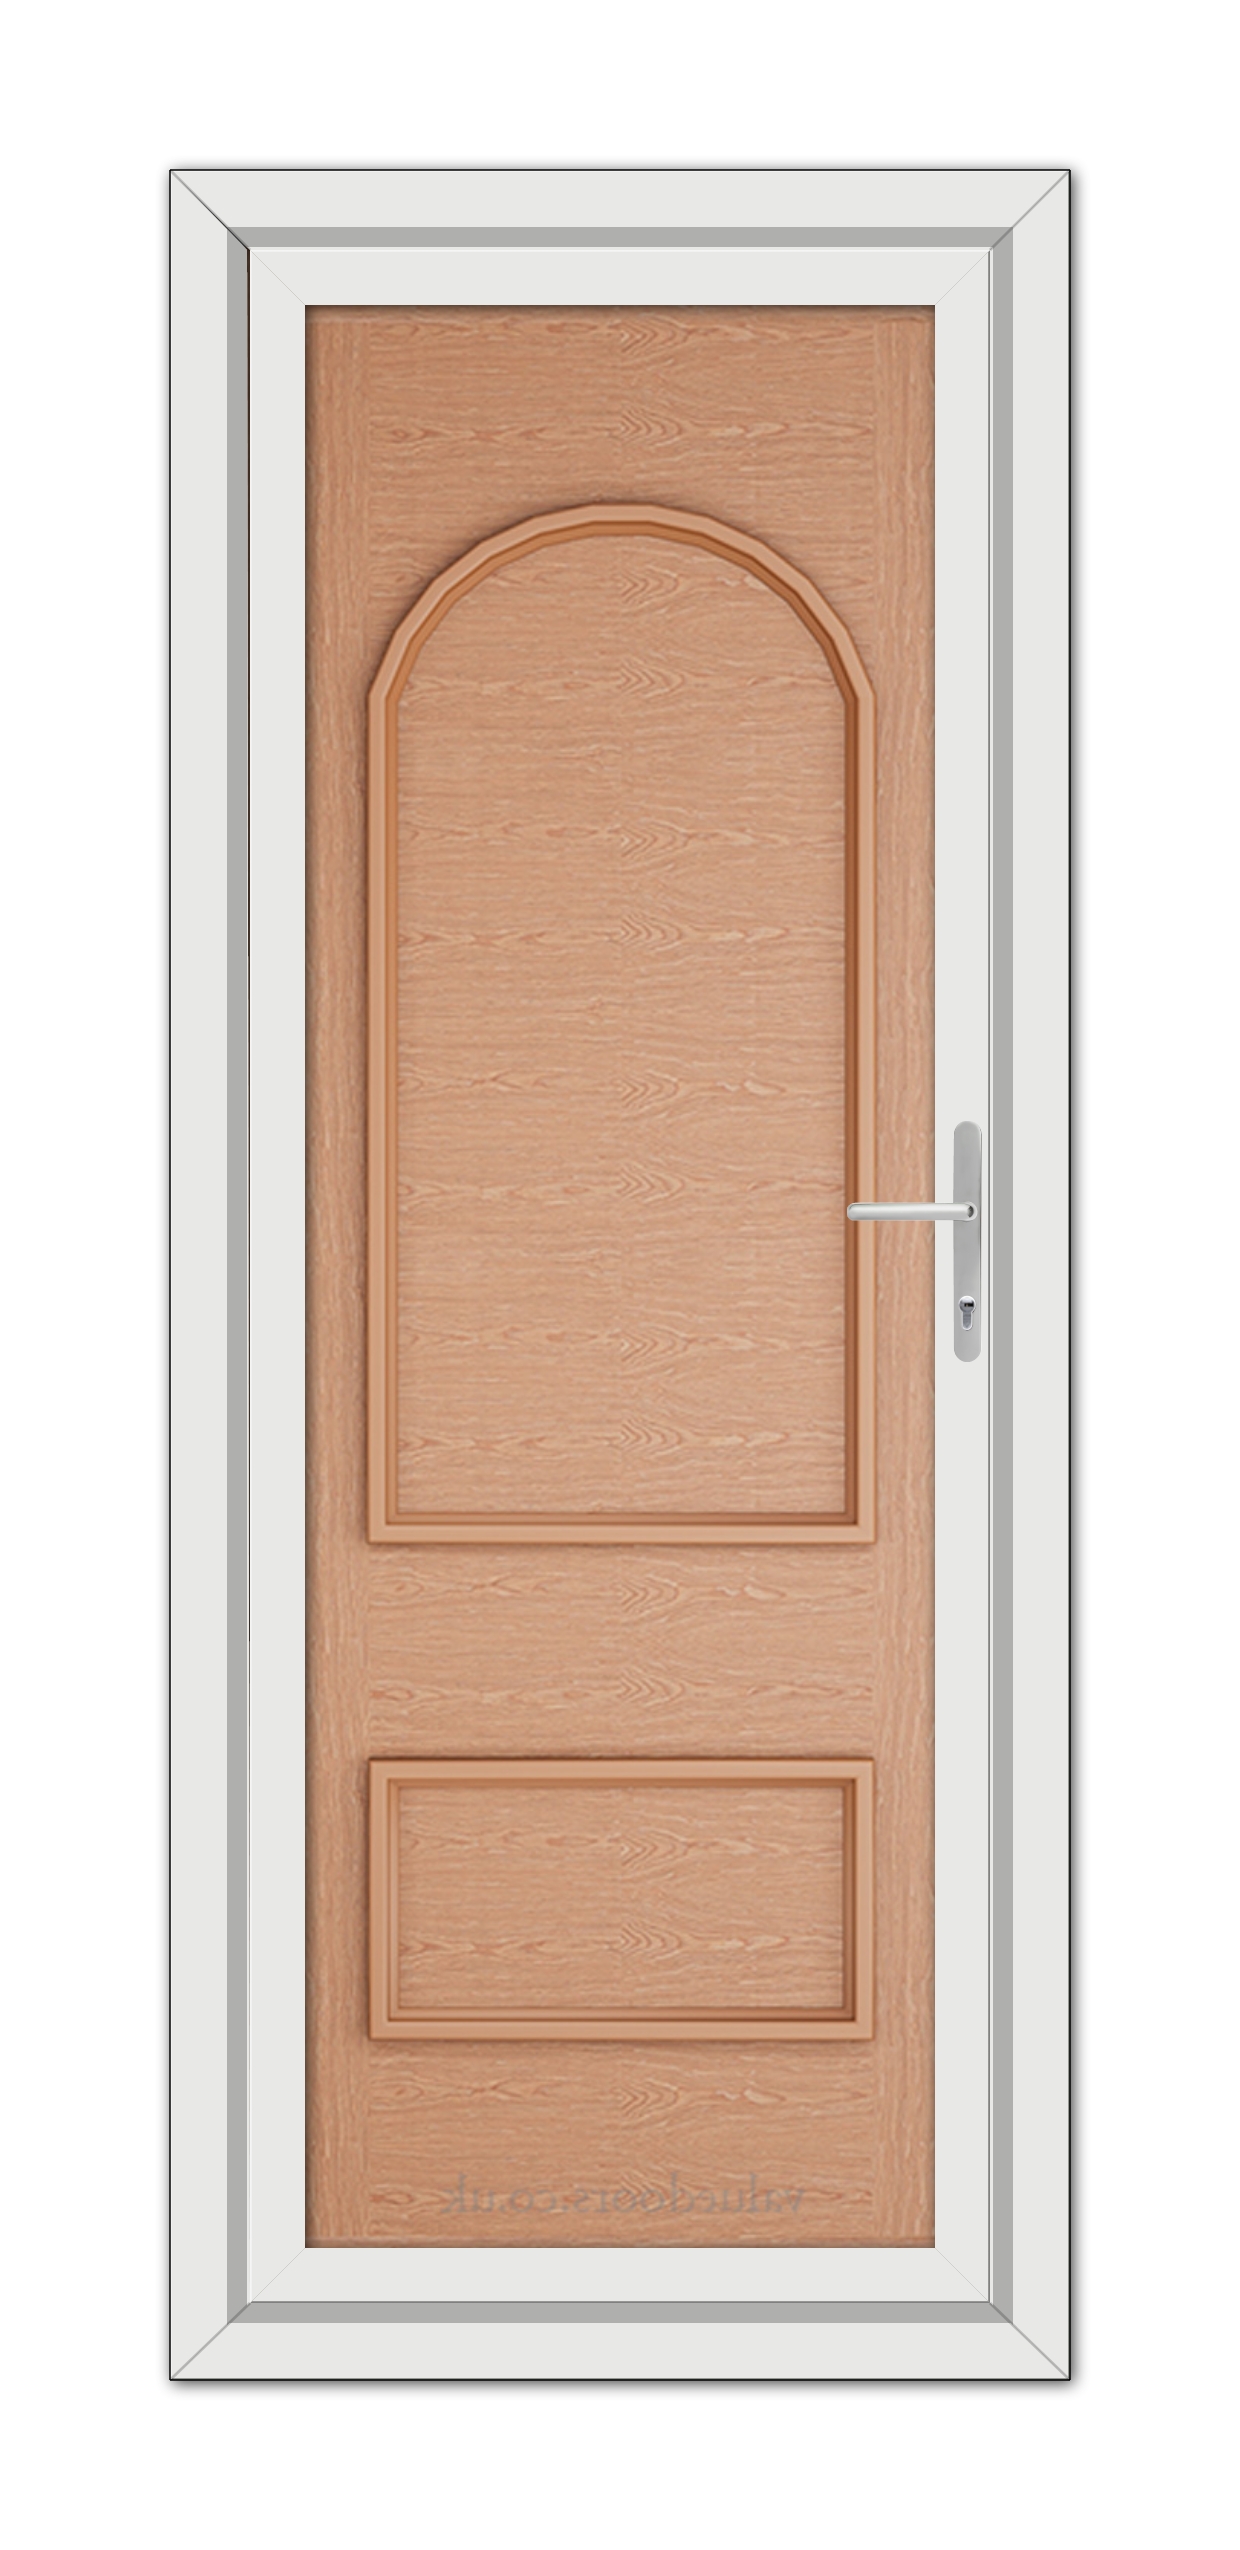 An Irish Oak Rockingham Solid uPVC door with a white frame.